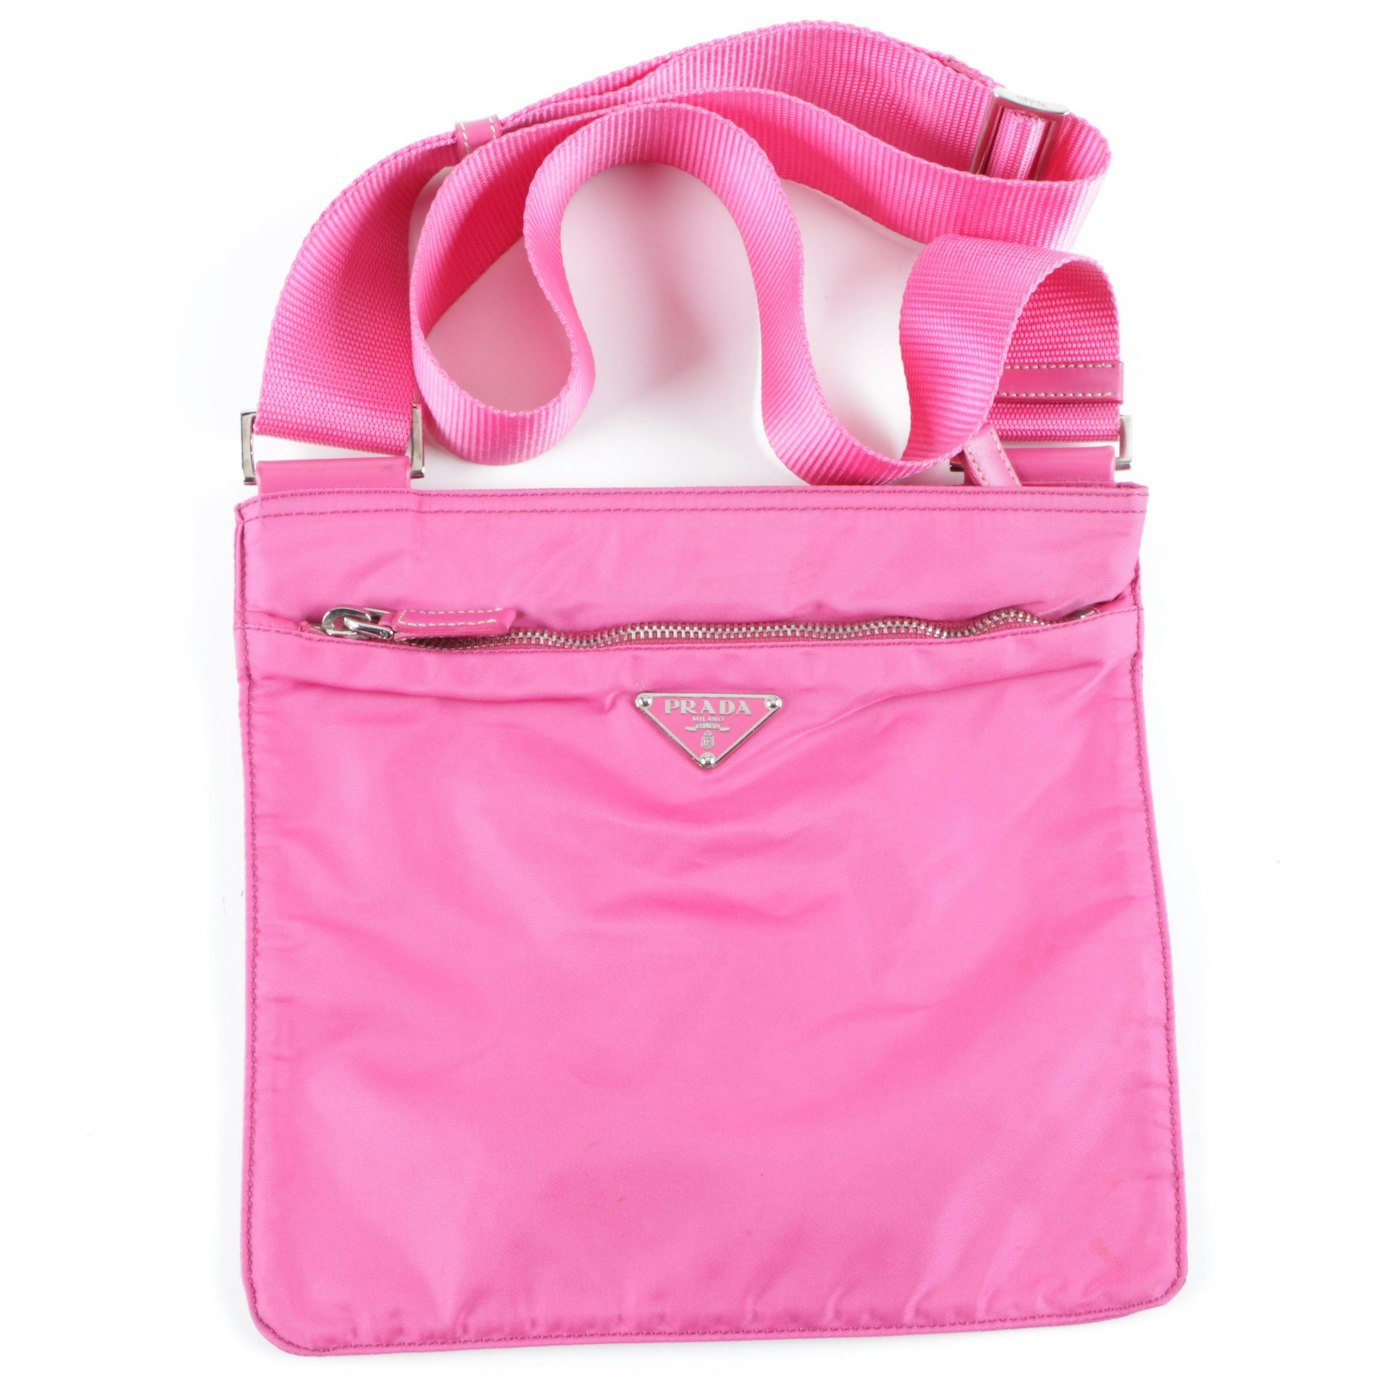 Prada Pink Nylon Crossbody Bag | EBTH